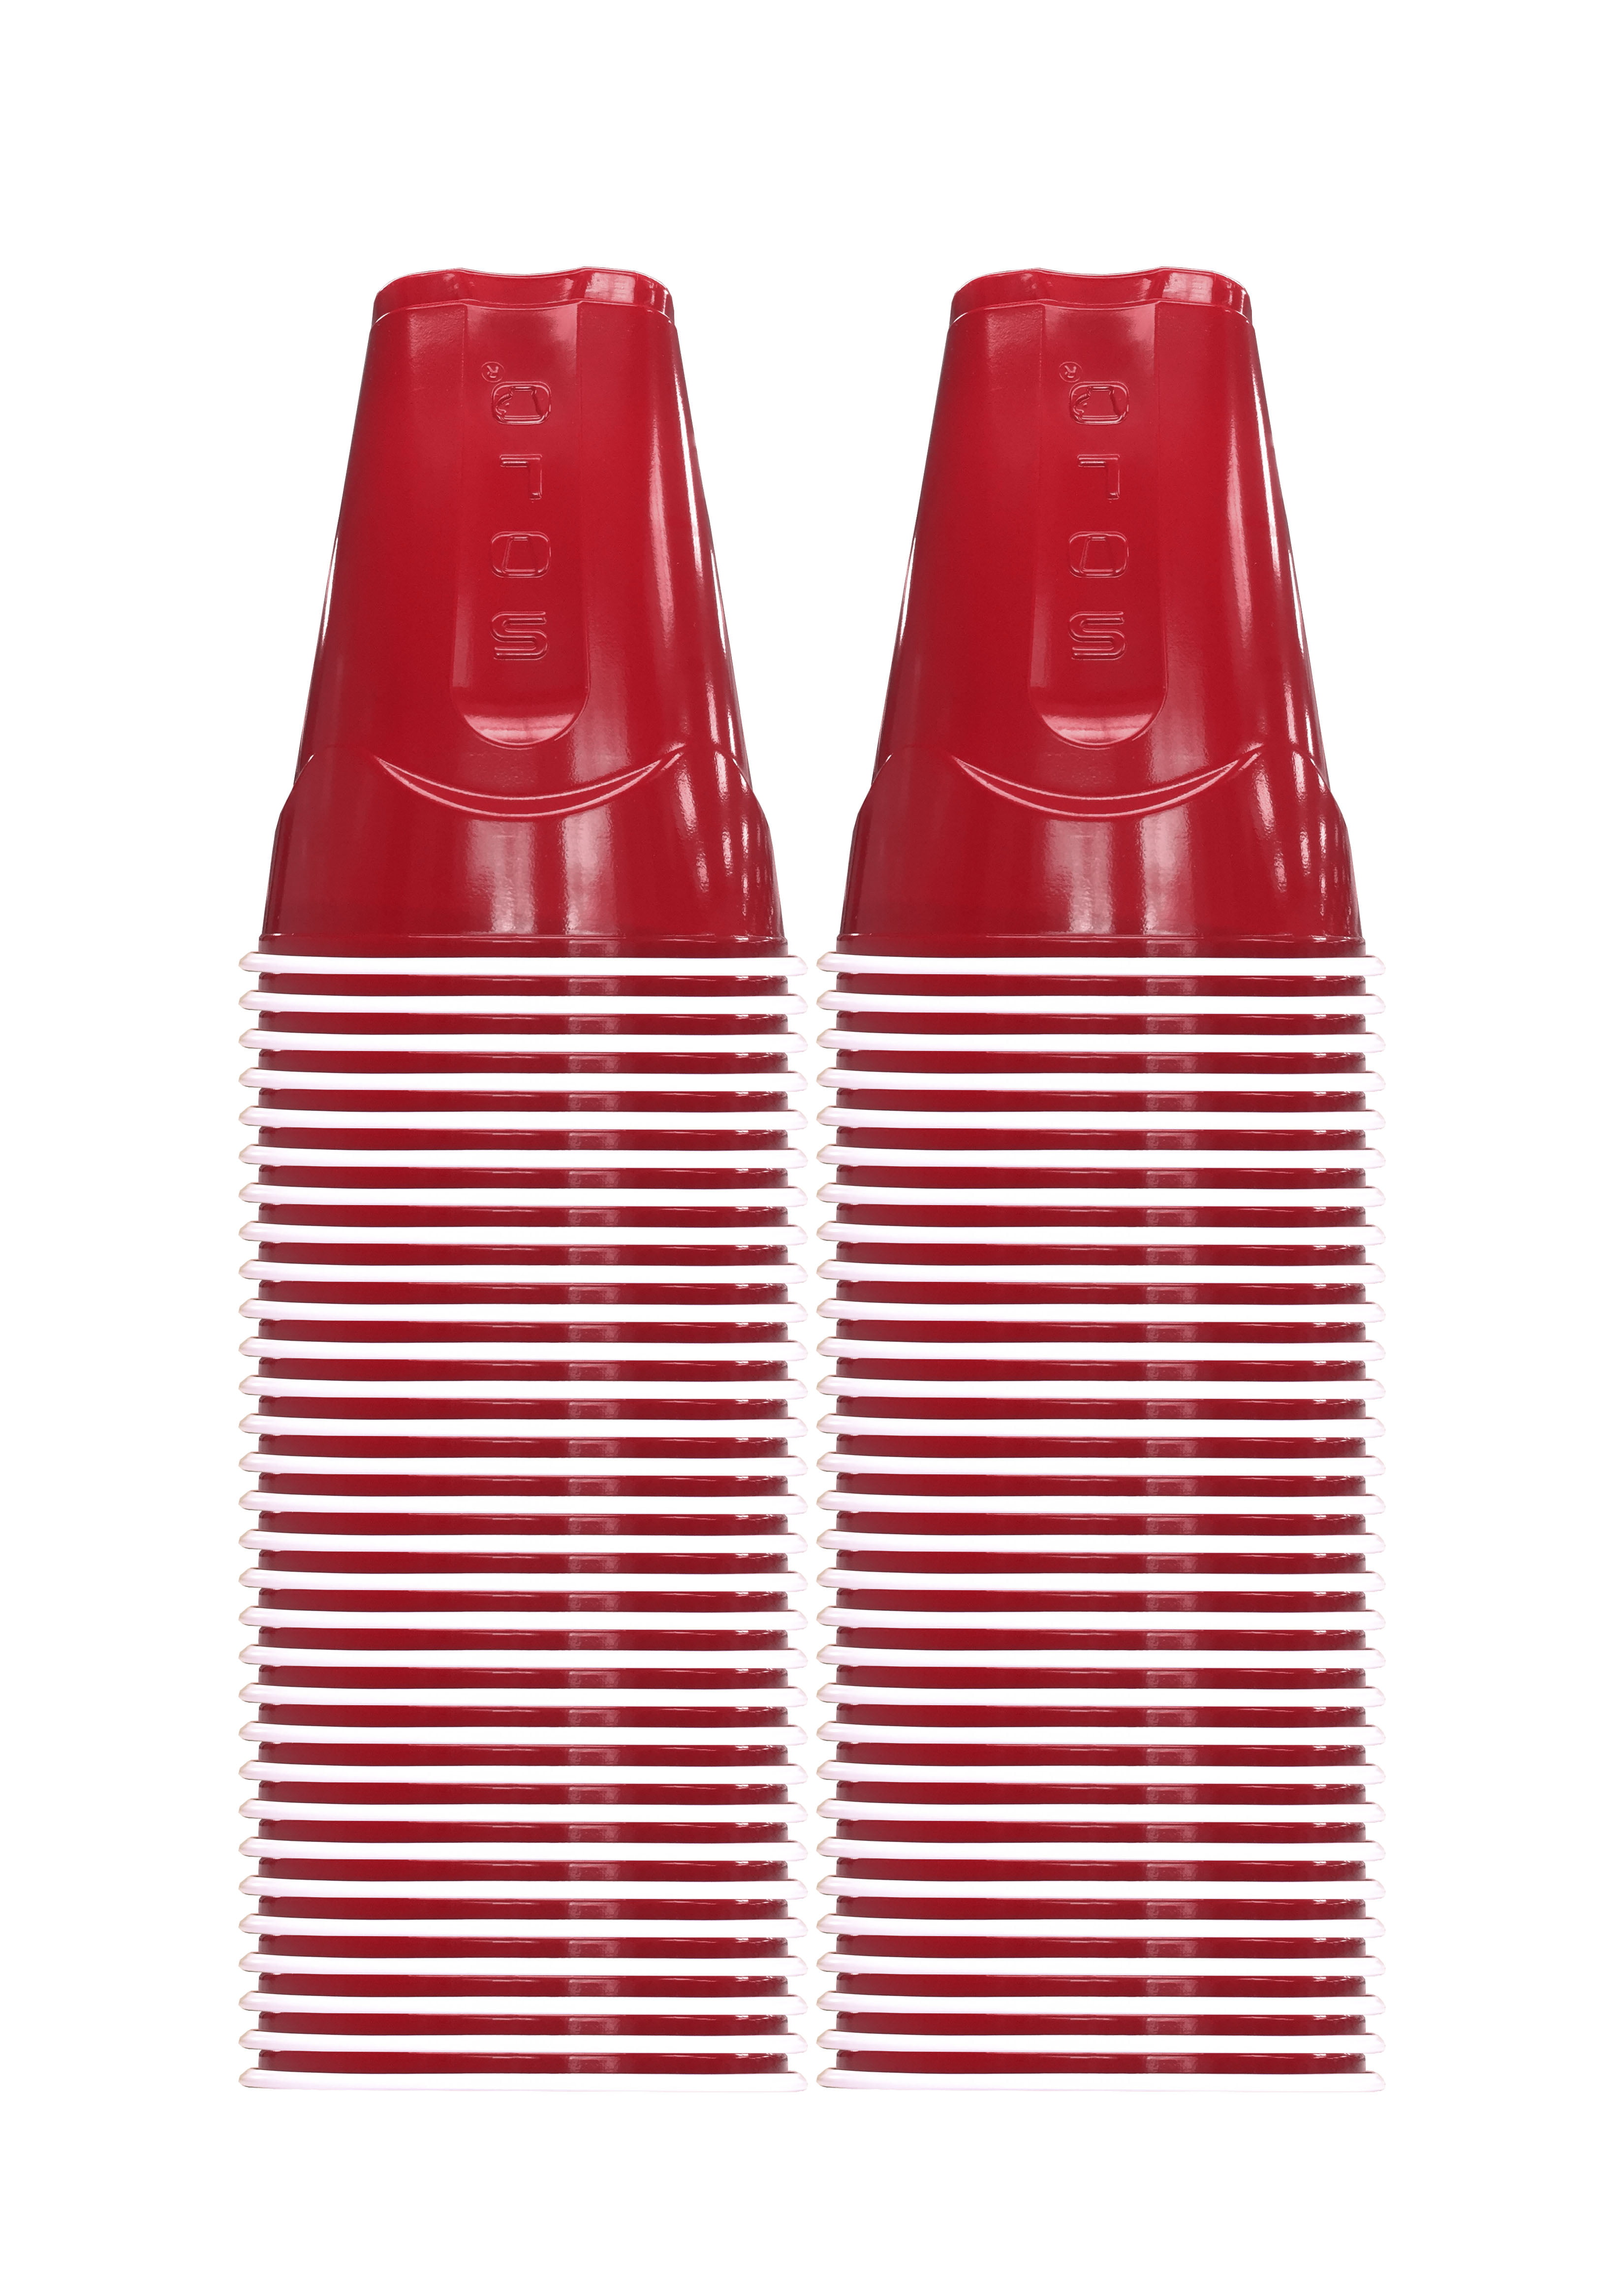 Solo Red Plastic Cup 18 oz. – Delta Distributing